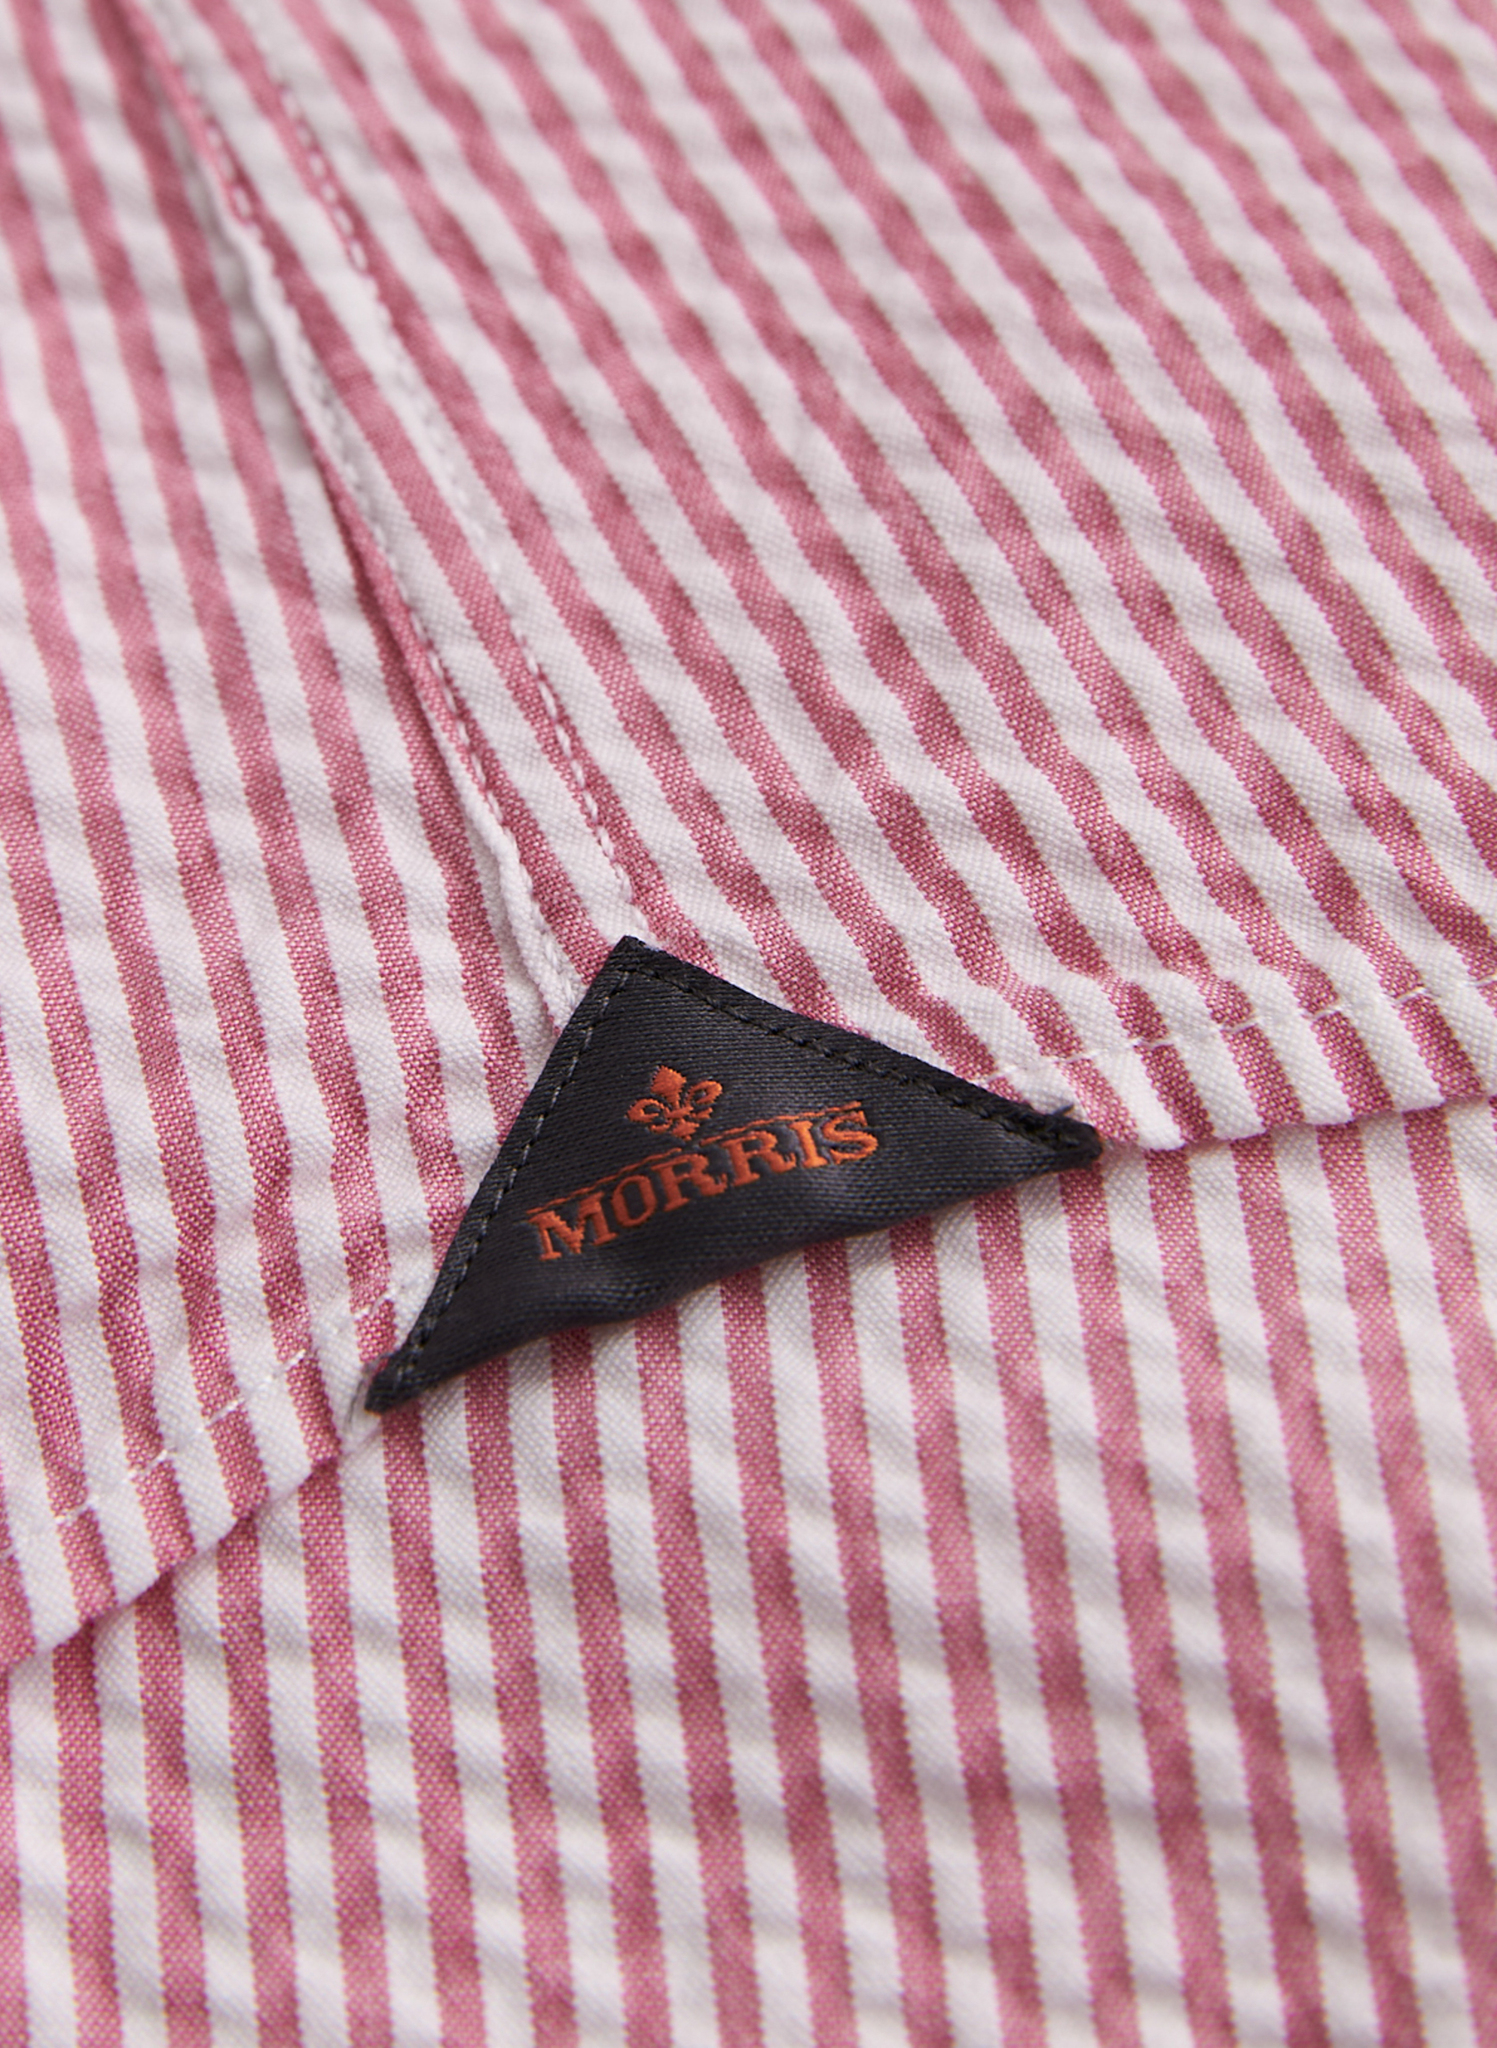 Morris - Seersucker Shirt, Cerise